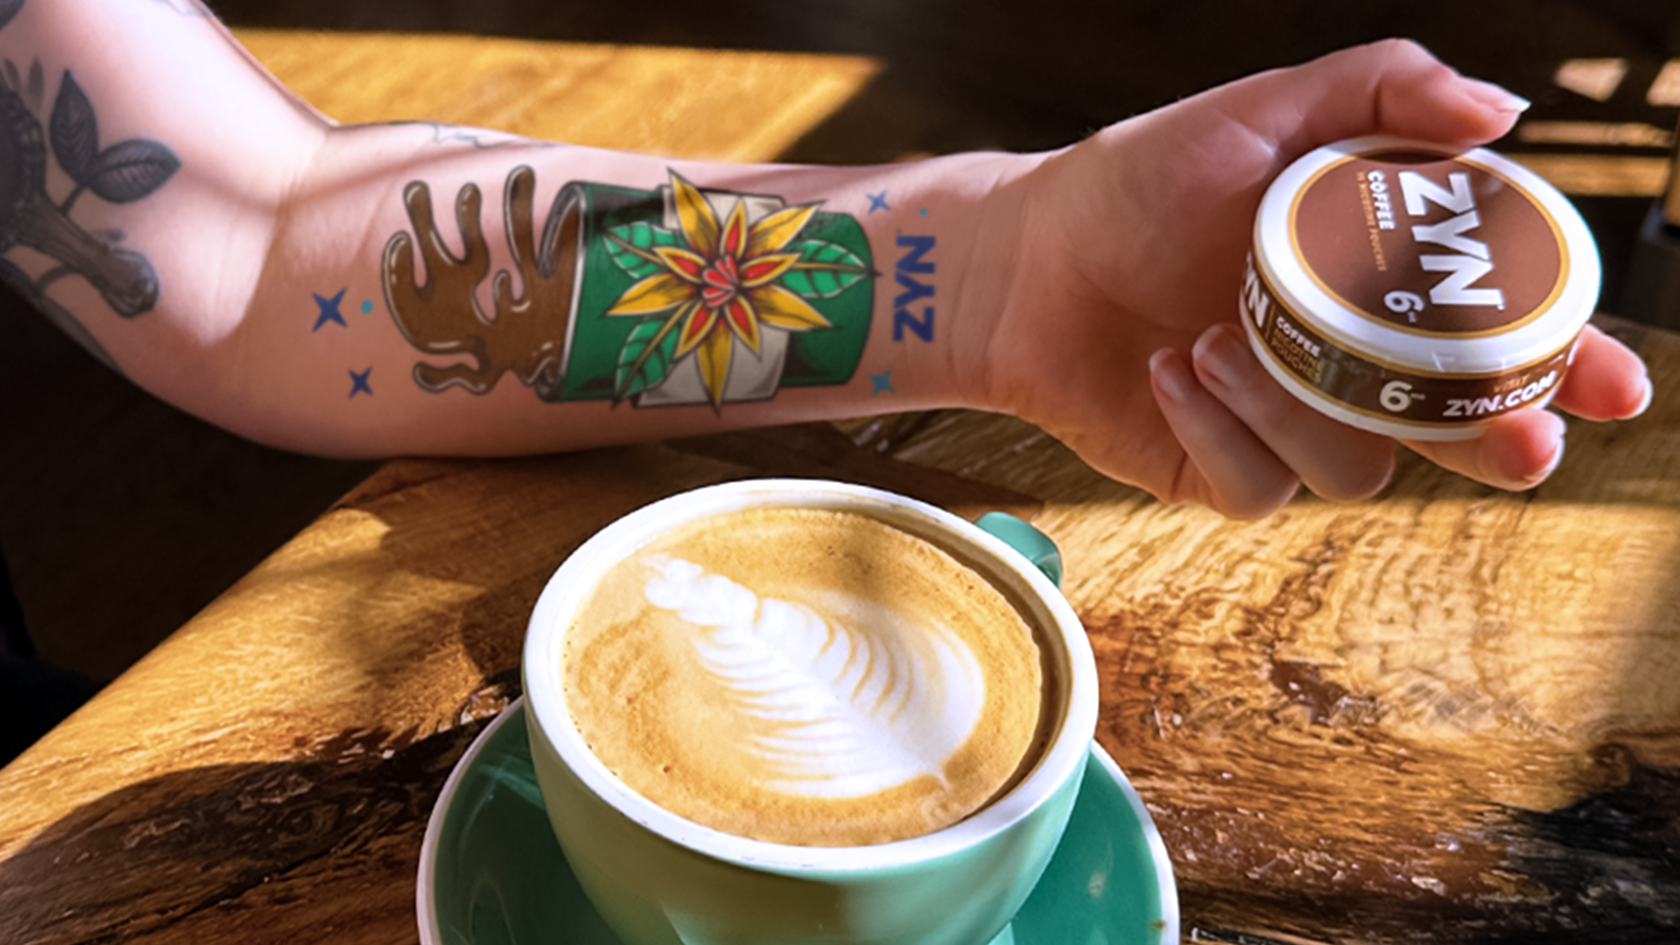 An artisan coffee next to woman's arm with ZYN tattoo